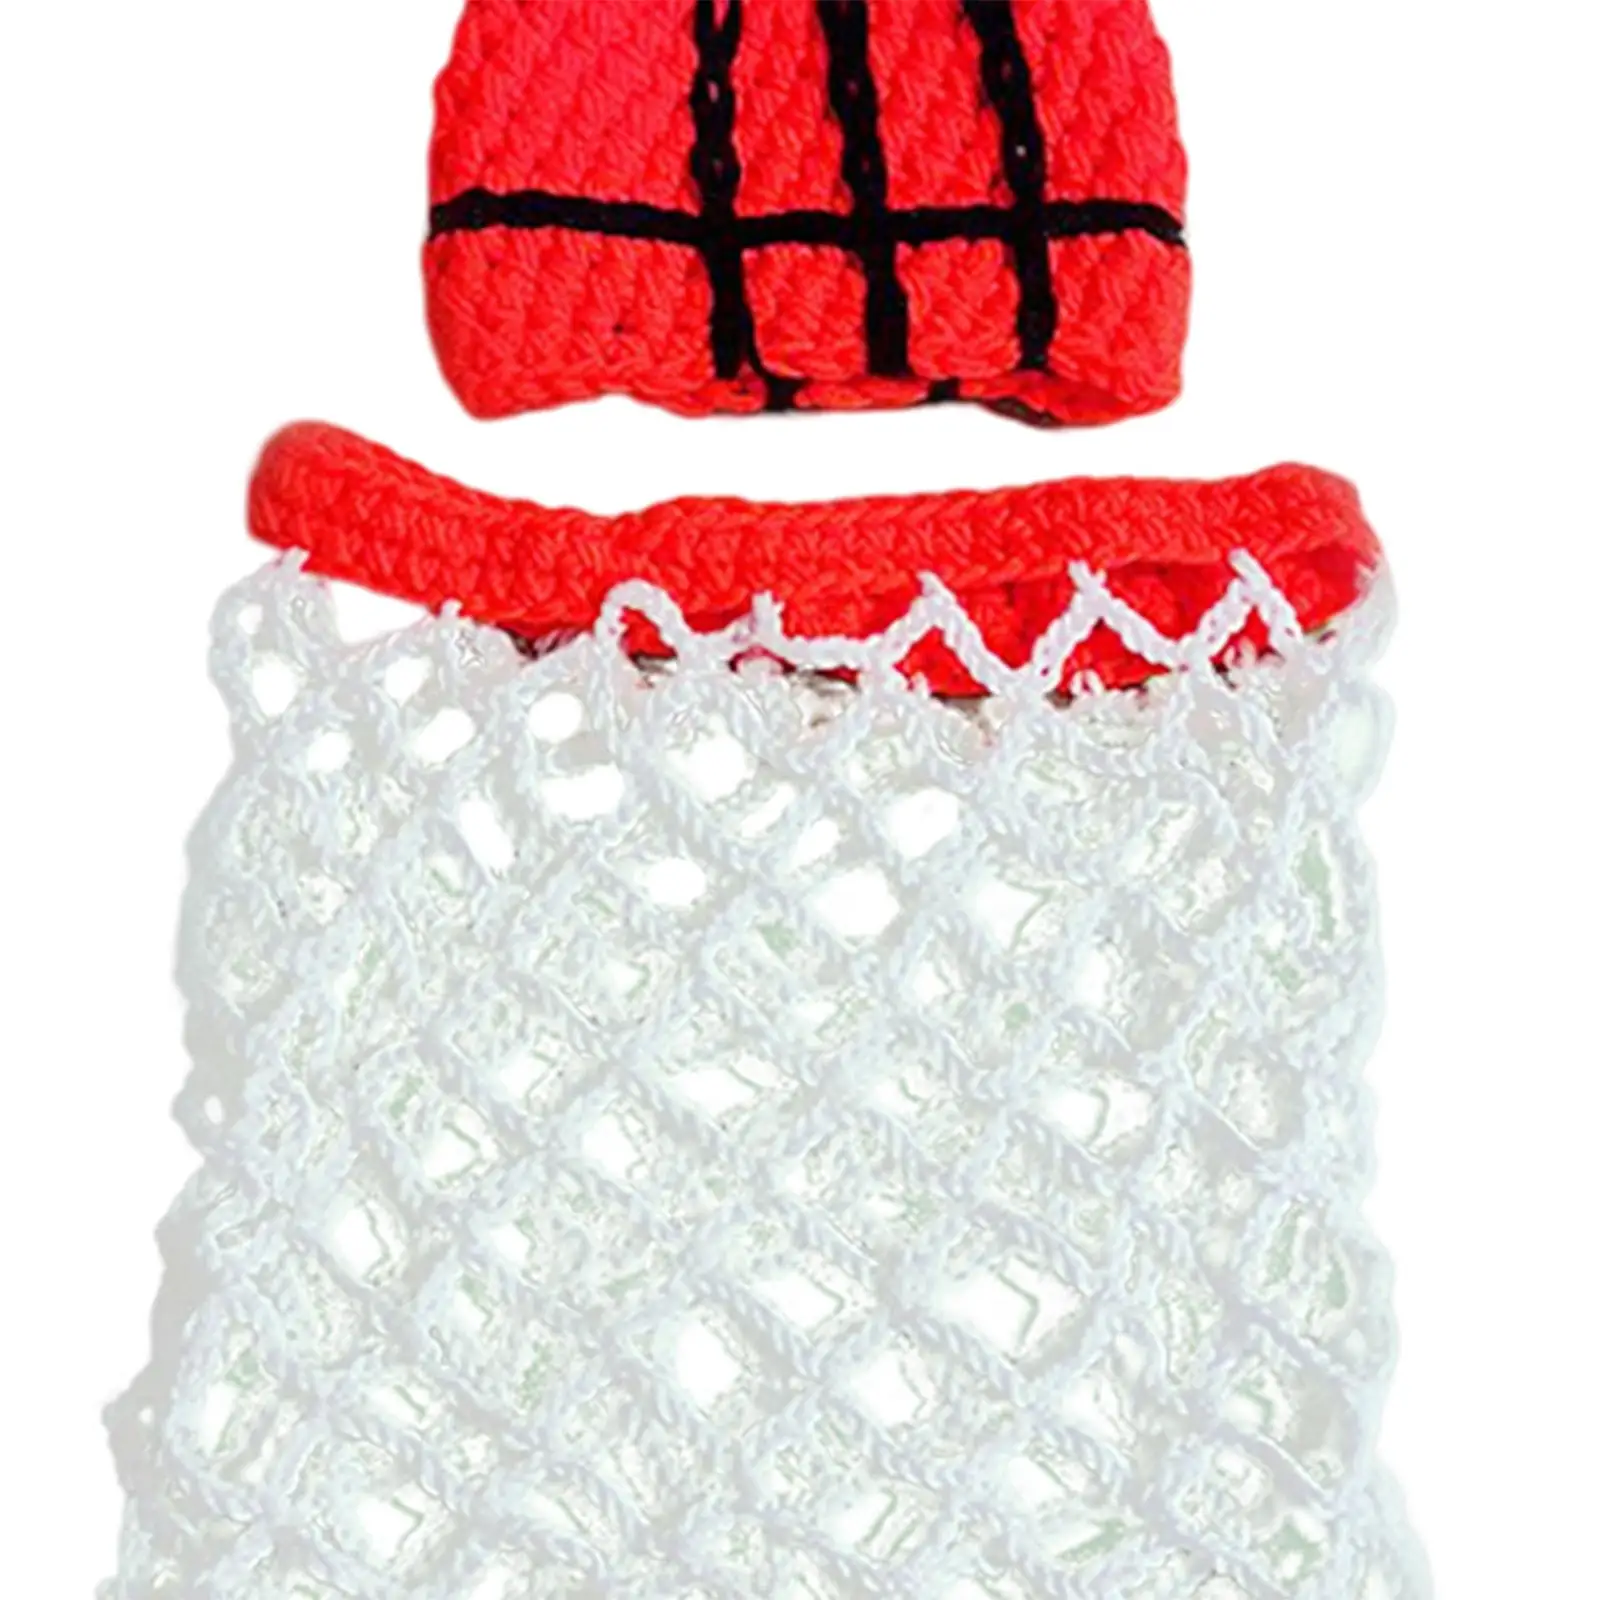 2x Newborn Basketball Crochet Costume Infant Photography Props